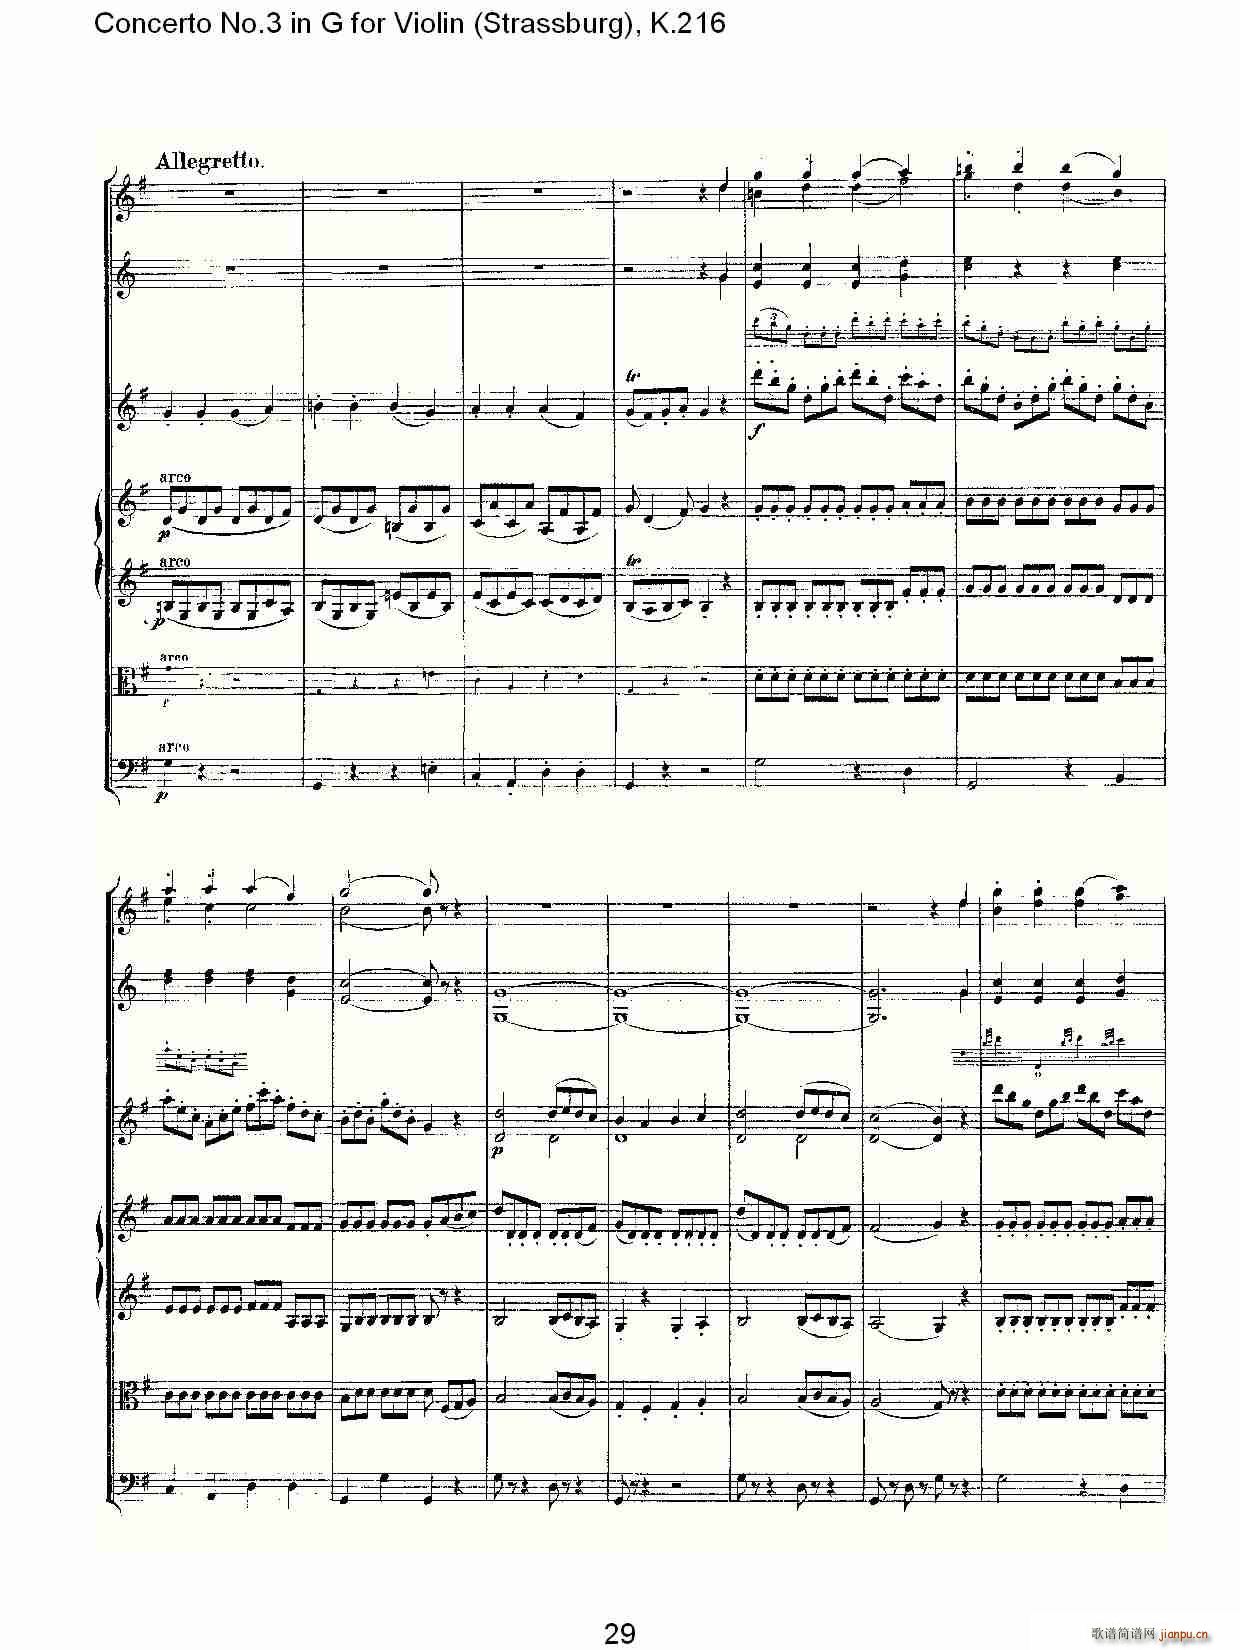 Concerto No.3 in G for Violin K.216(С)29